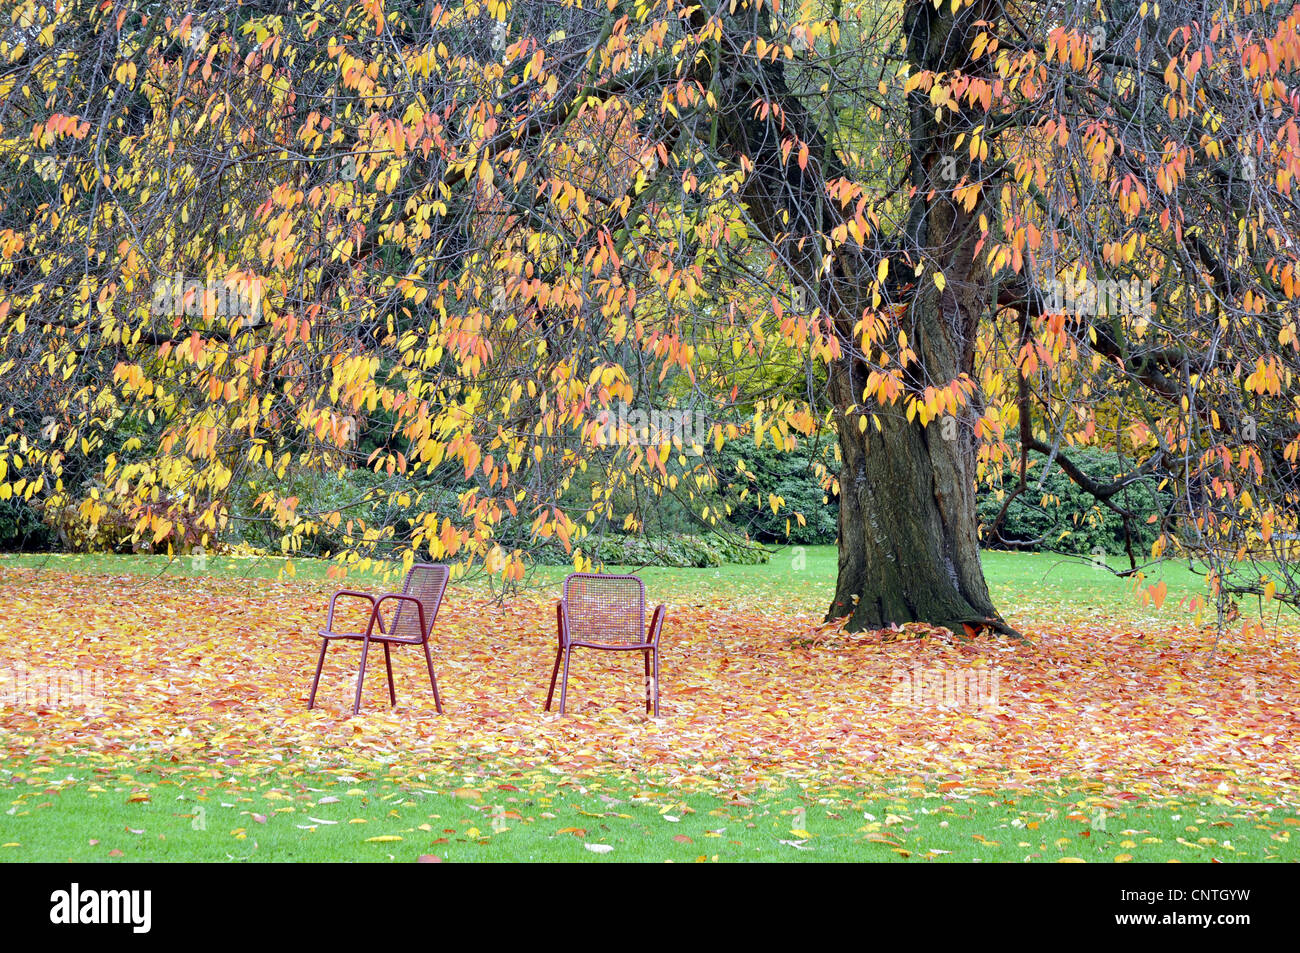 wild cherry, sweet cherry, gean, mazzard (Prunus avium), autumn in a park with two garden chairs, Germany Stock Photo